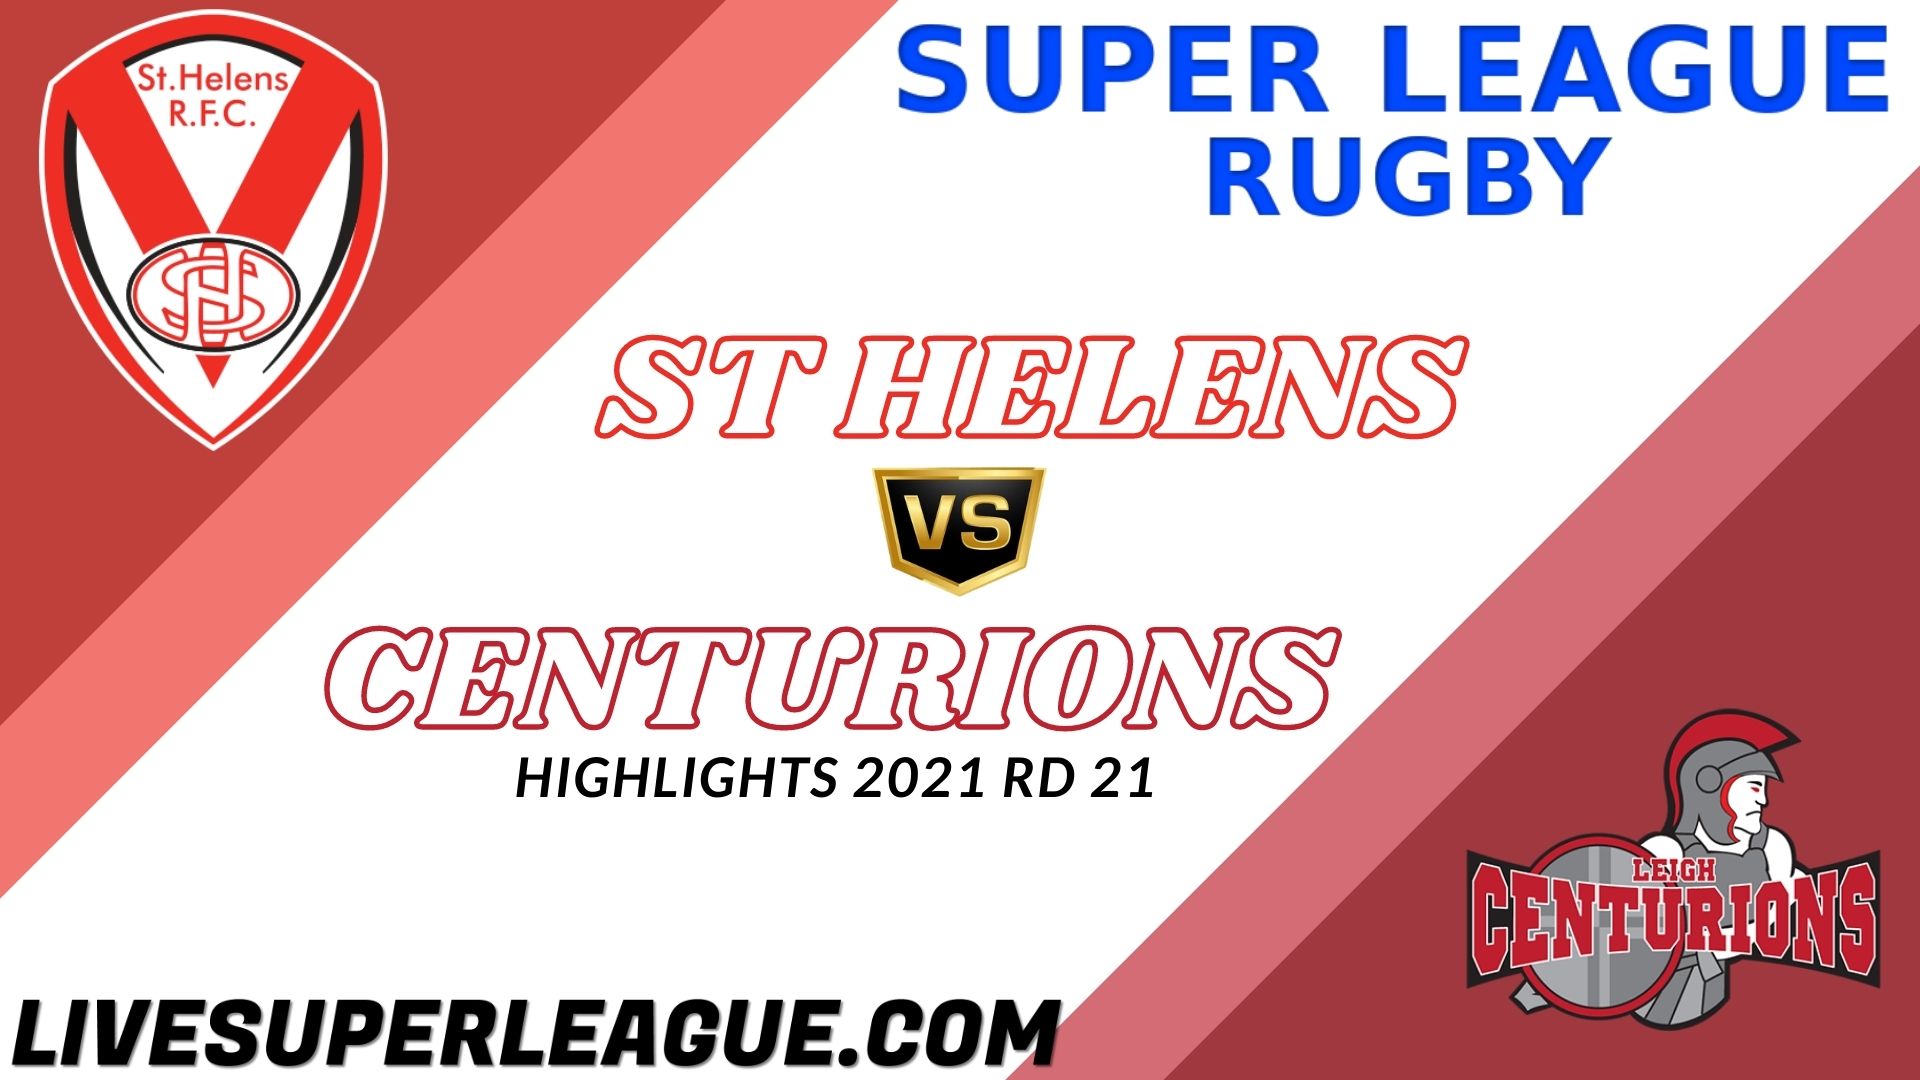 St Helens Vs Leigh Centurions Highlights 2021